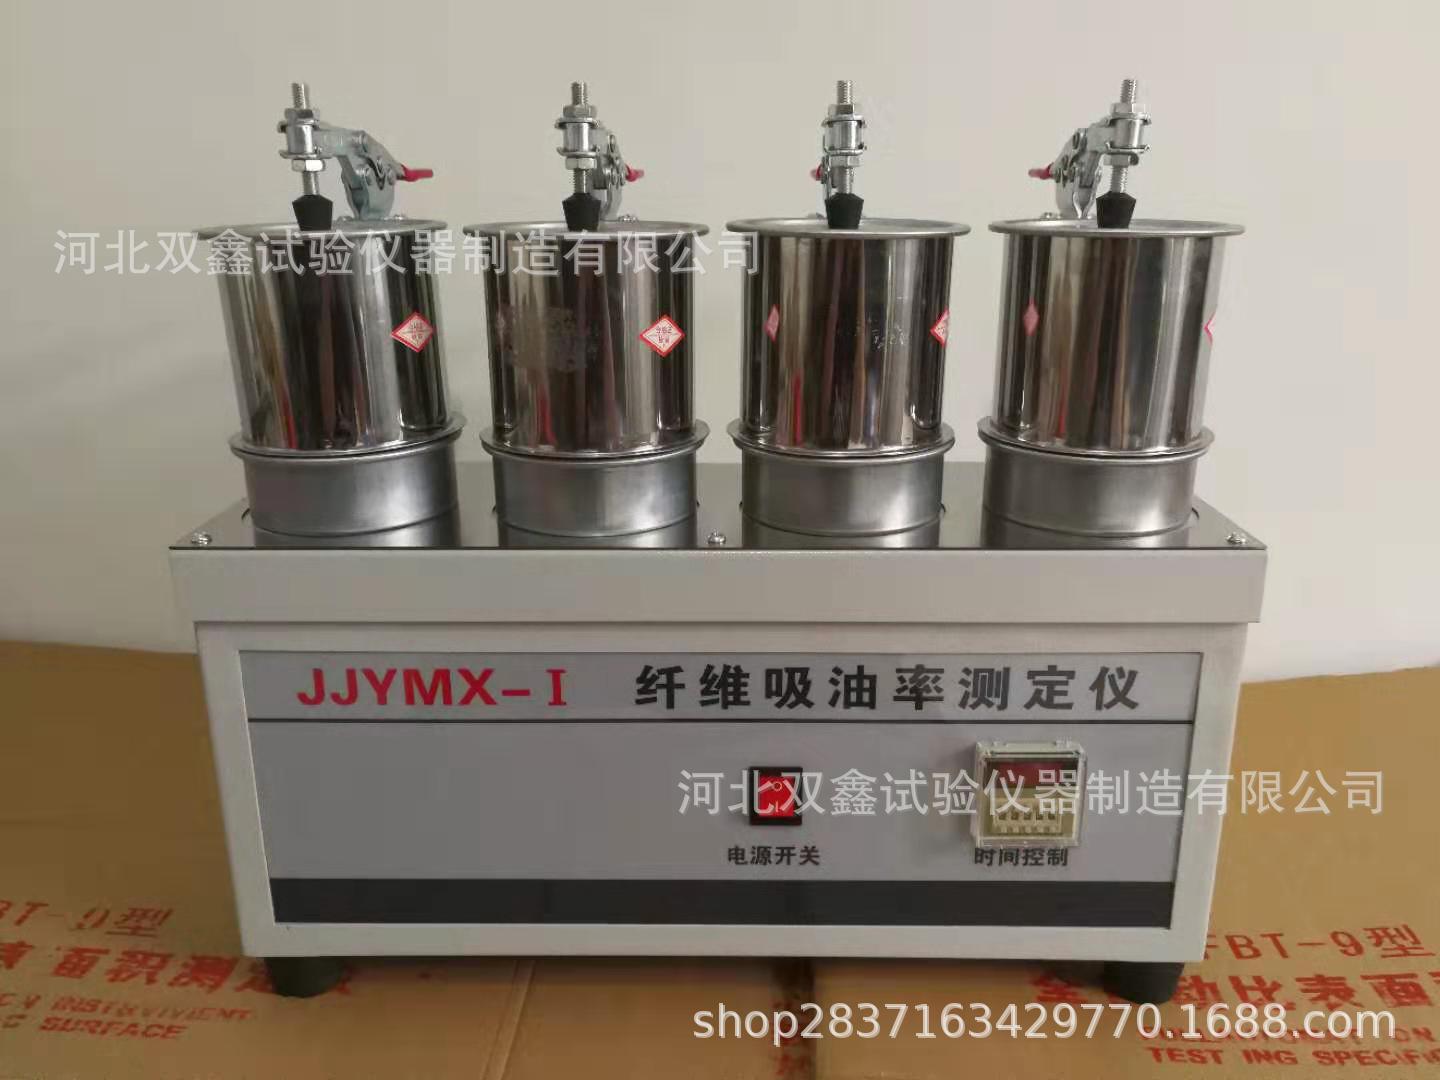 Supplying fibre Suction Measuring instrument JJYMX-1